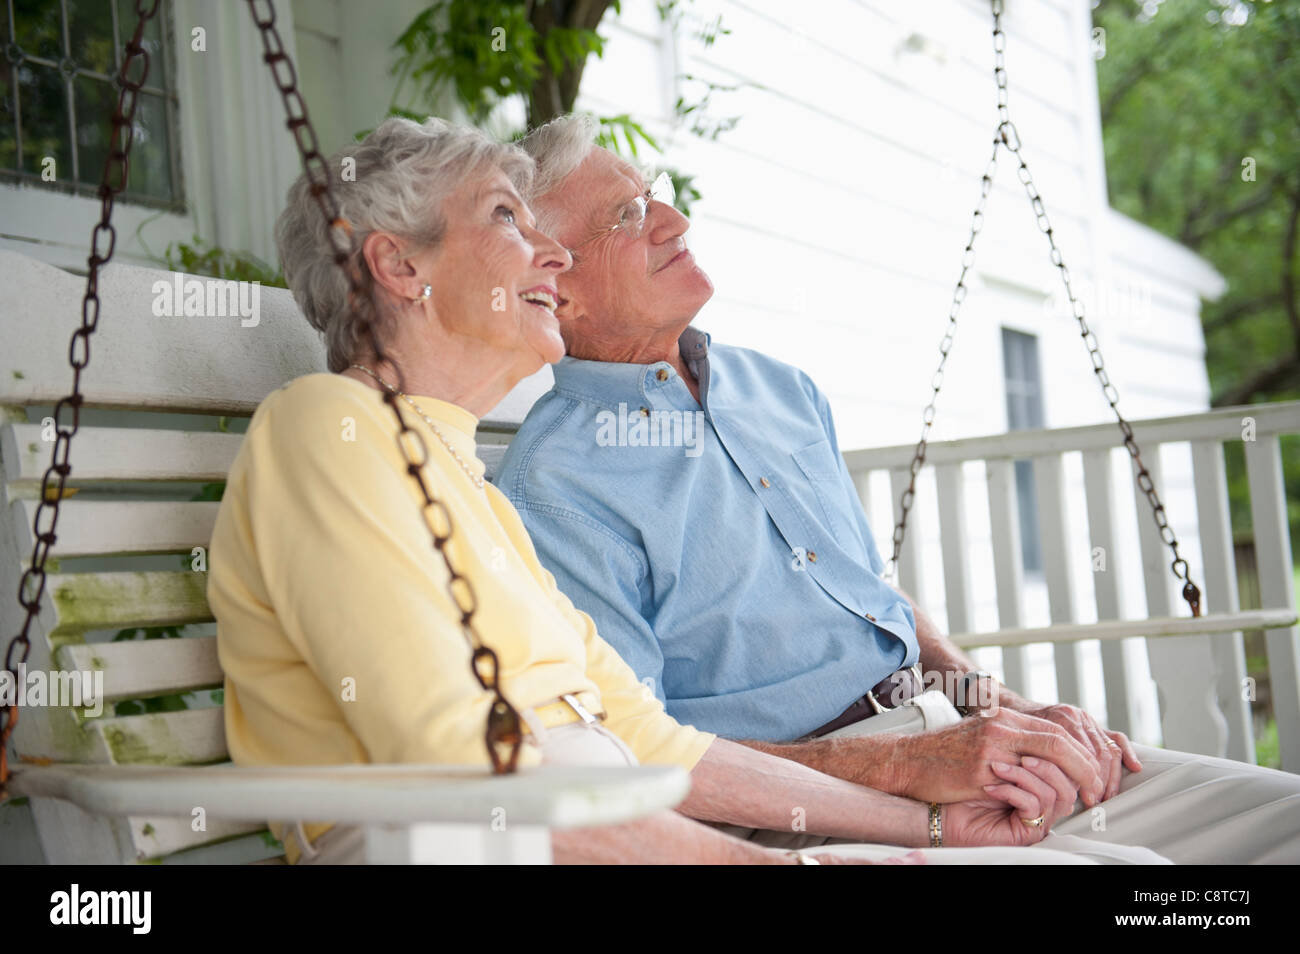 USA, New York State, Old Westbury, Senior couple sitting on porch swing Stock Photo